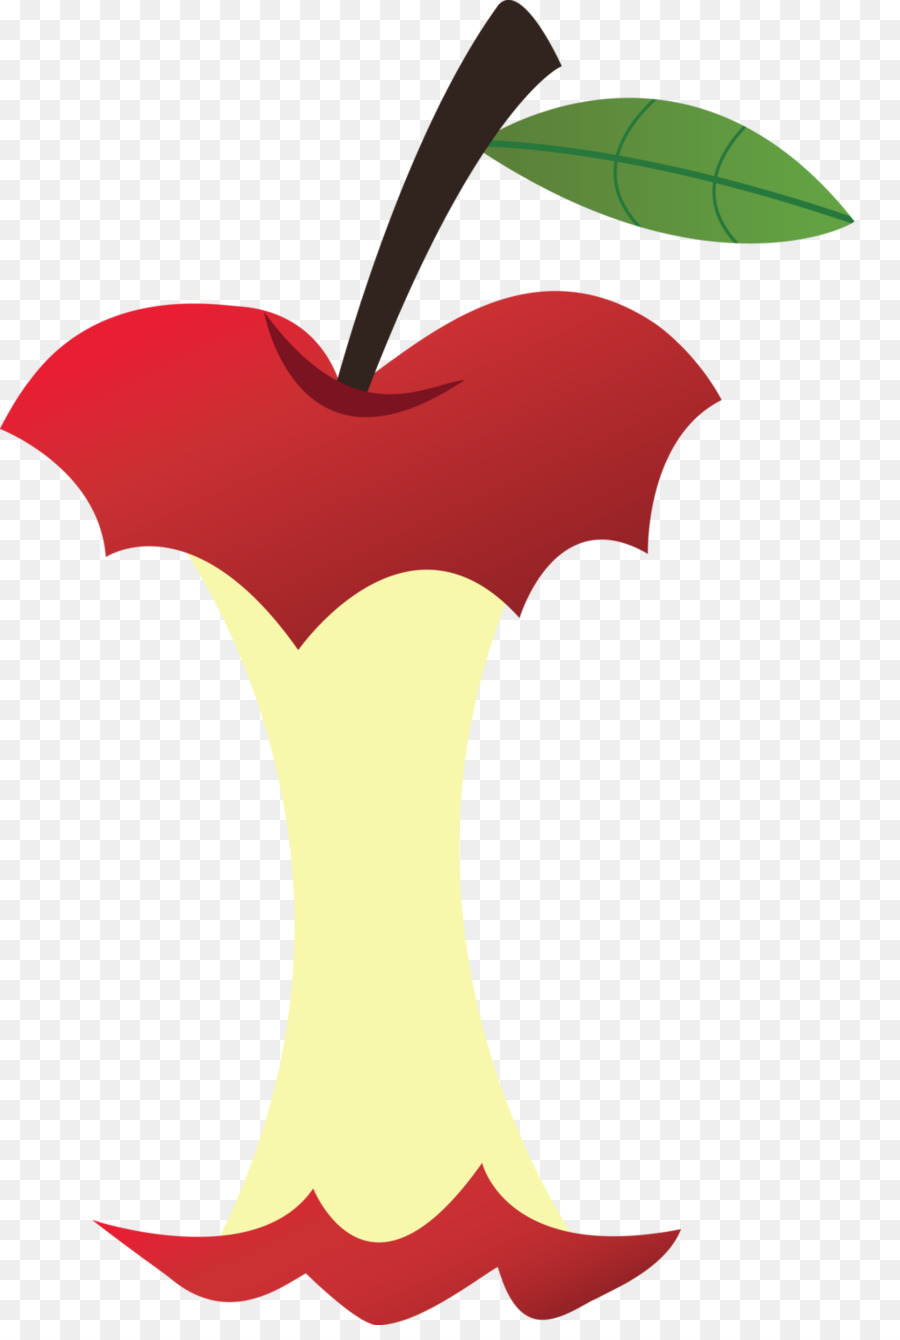 Biting Download Clip art - apples png download - 1024*1508 - Free Transparent Biting png Download.